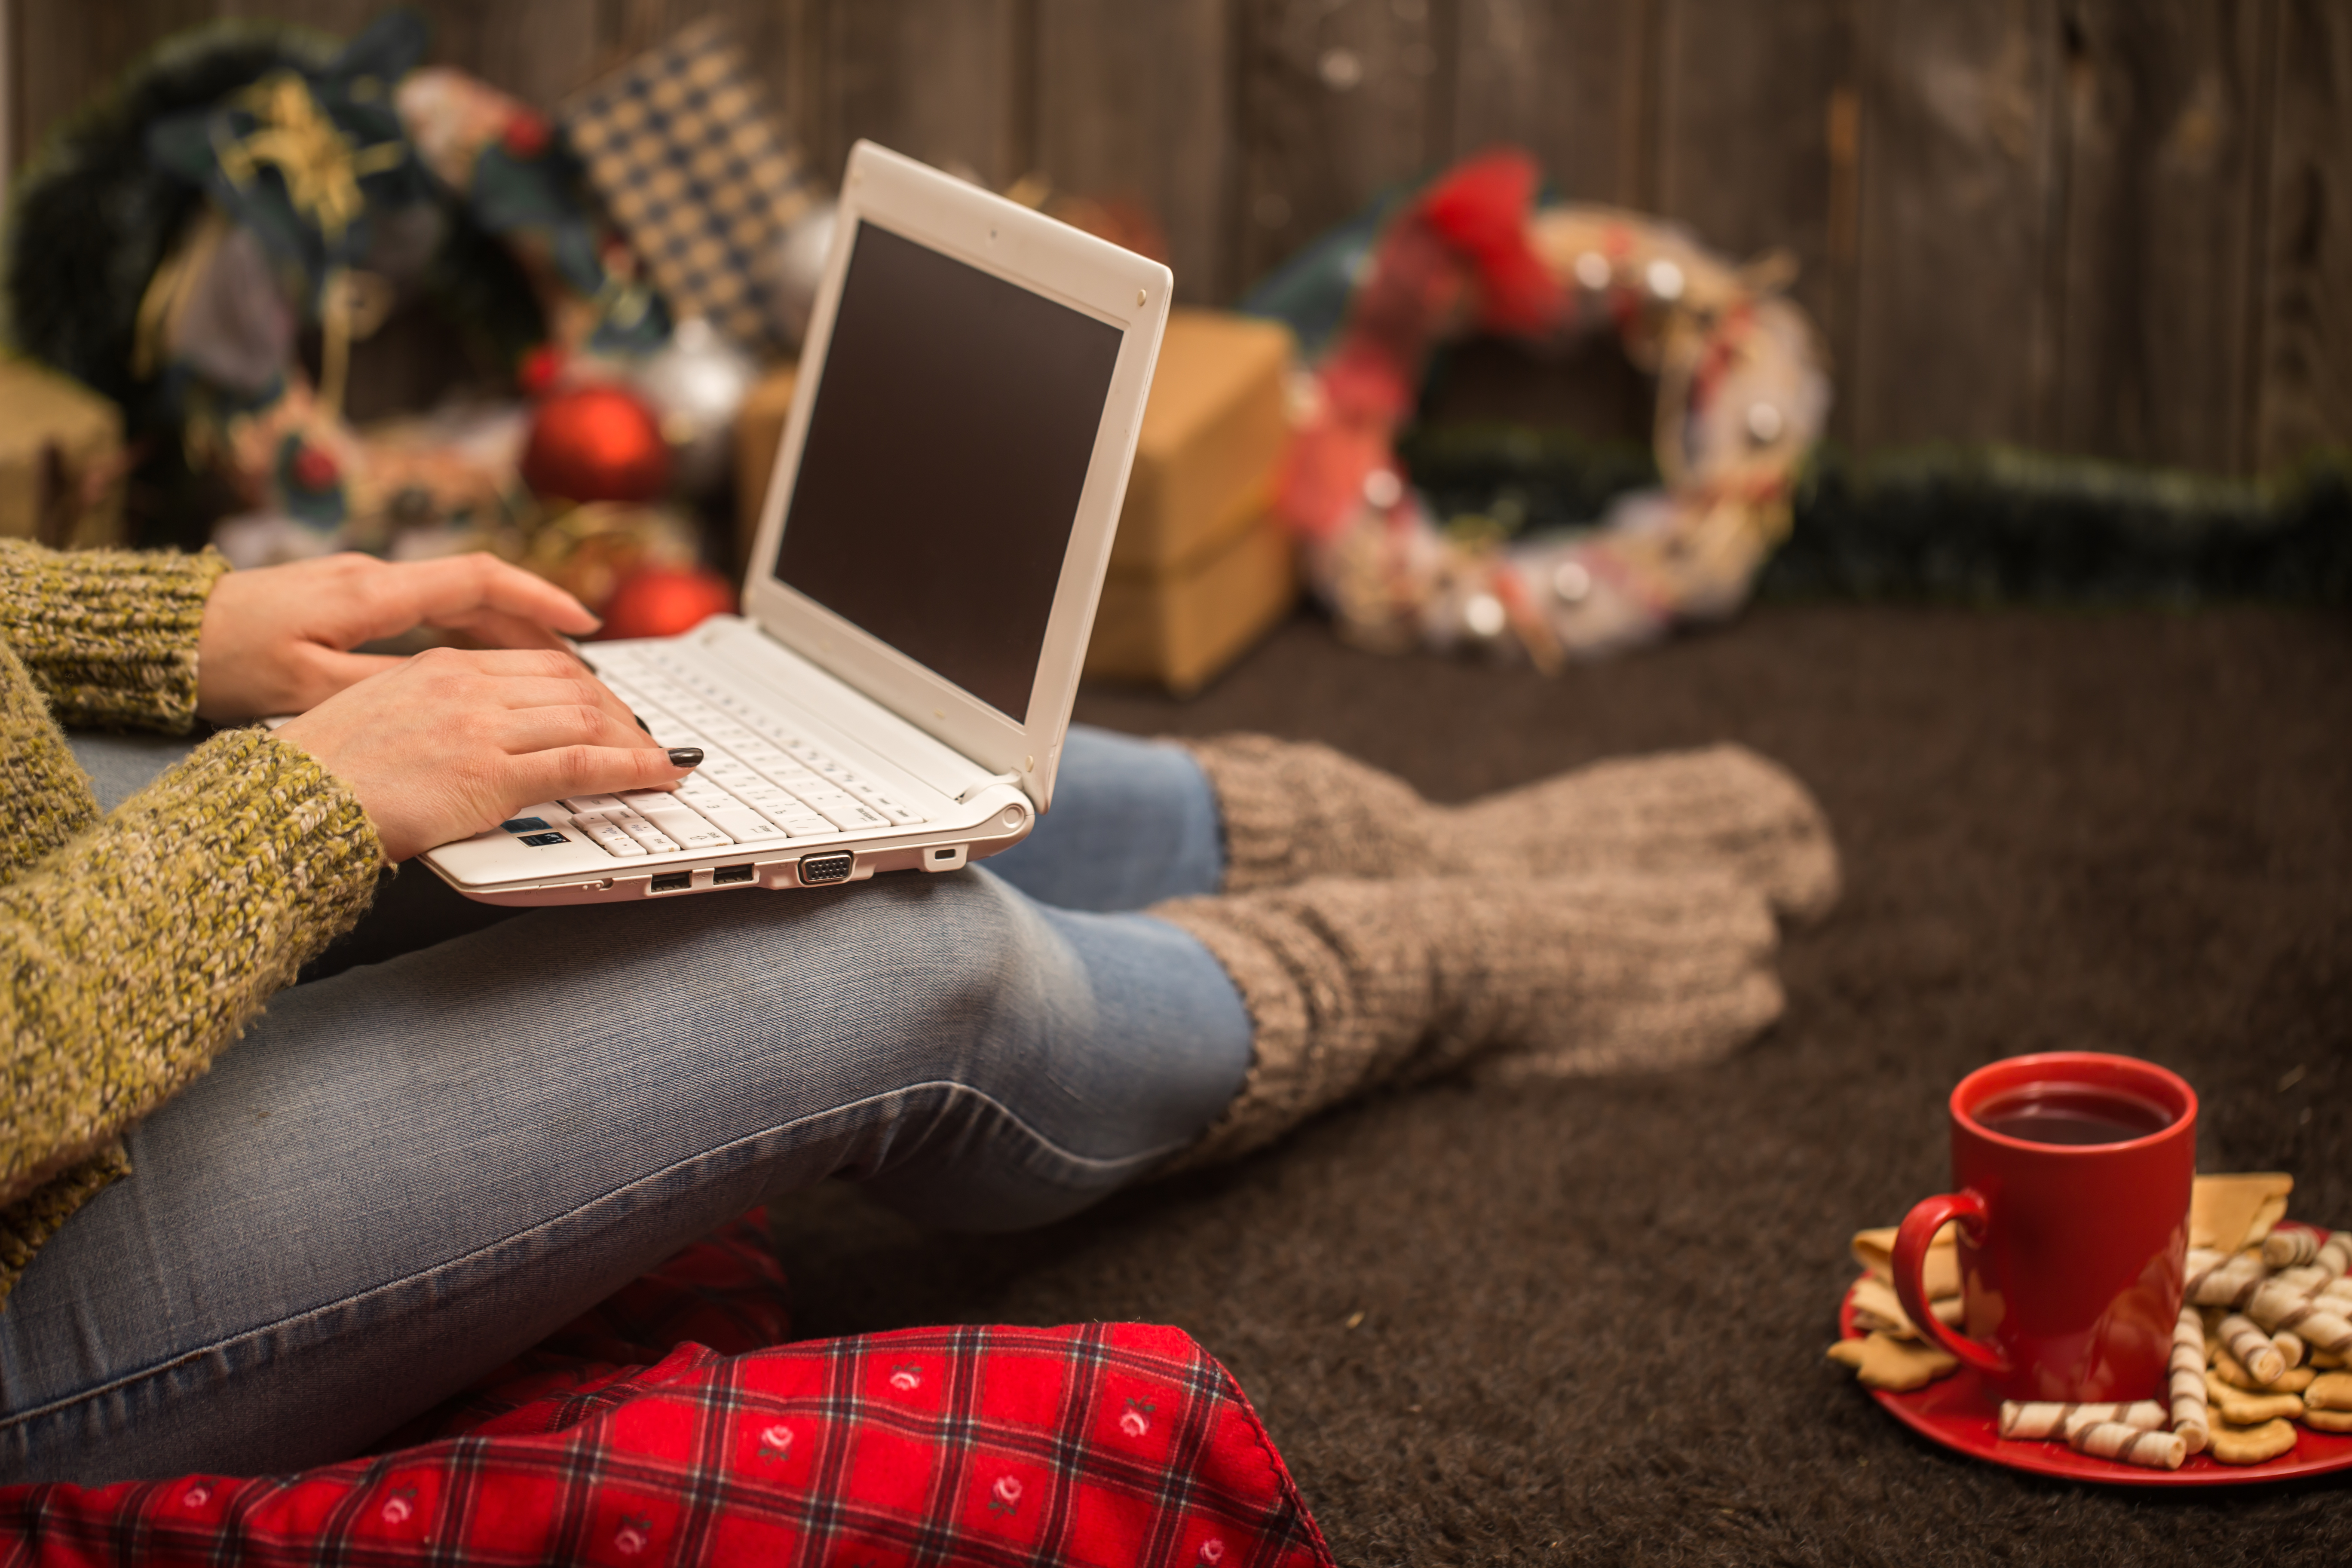 Las Mejores Laptops: El Regalo Ideal para esta Navidad<span class="wtr-time-wrap after-title"><span class="wtr-time-number">4</span> min de lectura</span>